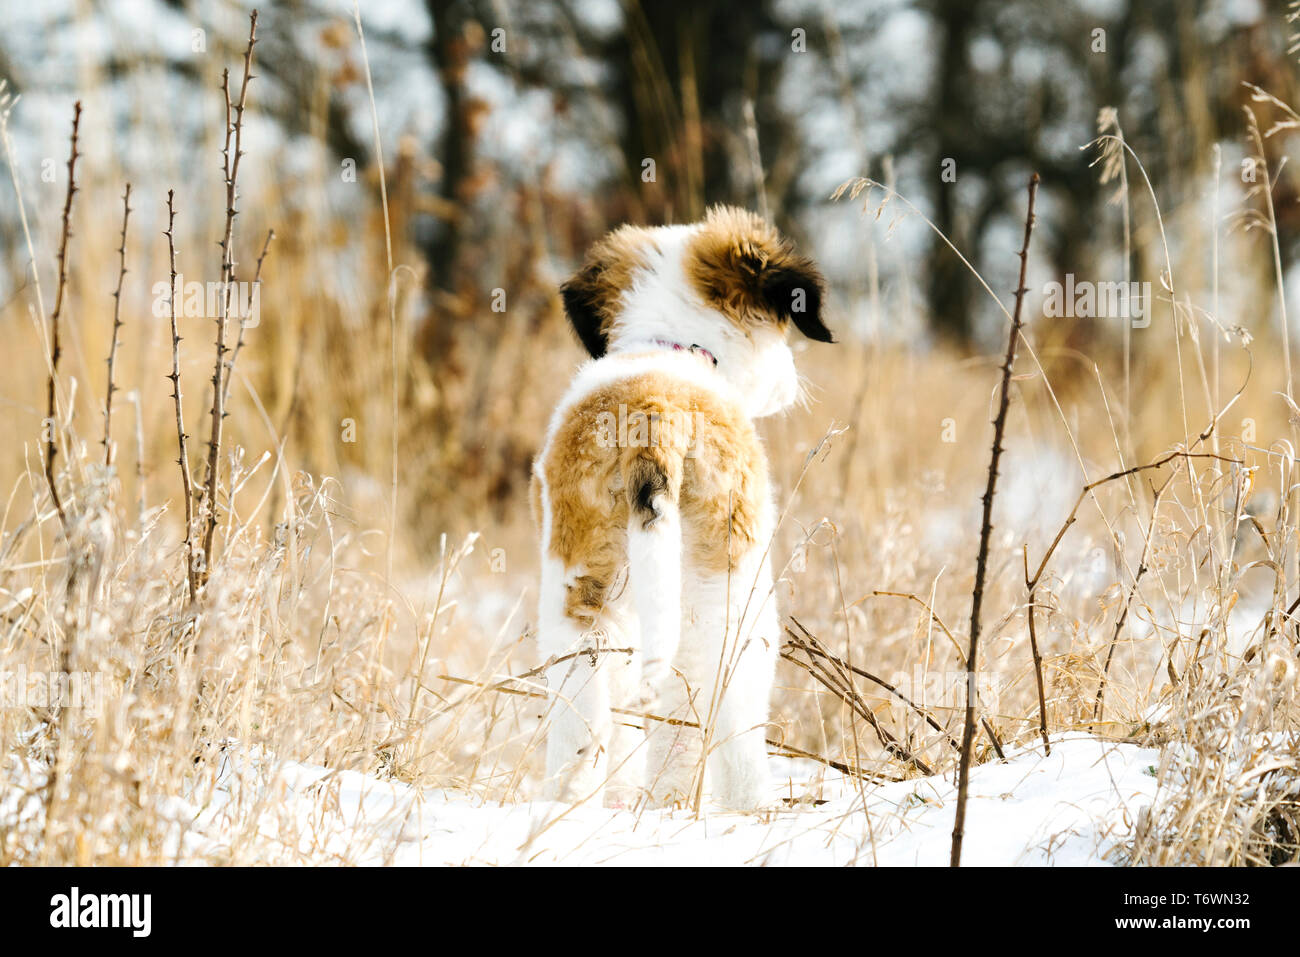 Rear view of a Saint Bernard puppy standing in a snowy field Stock Photo